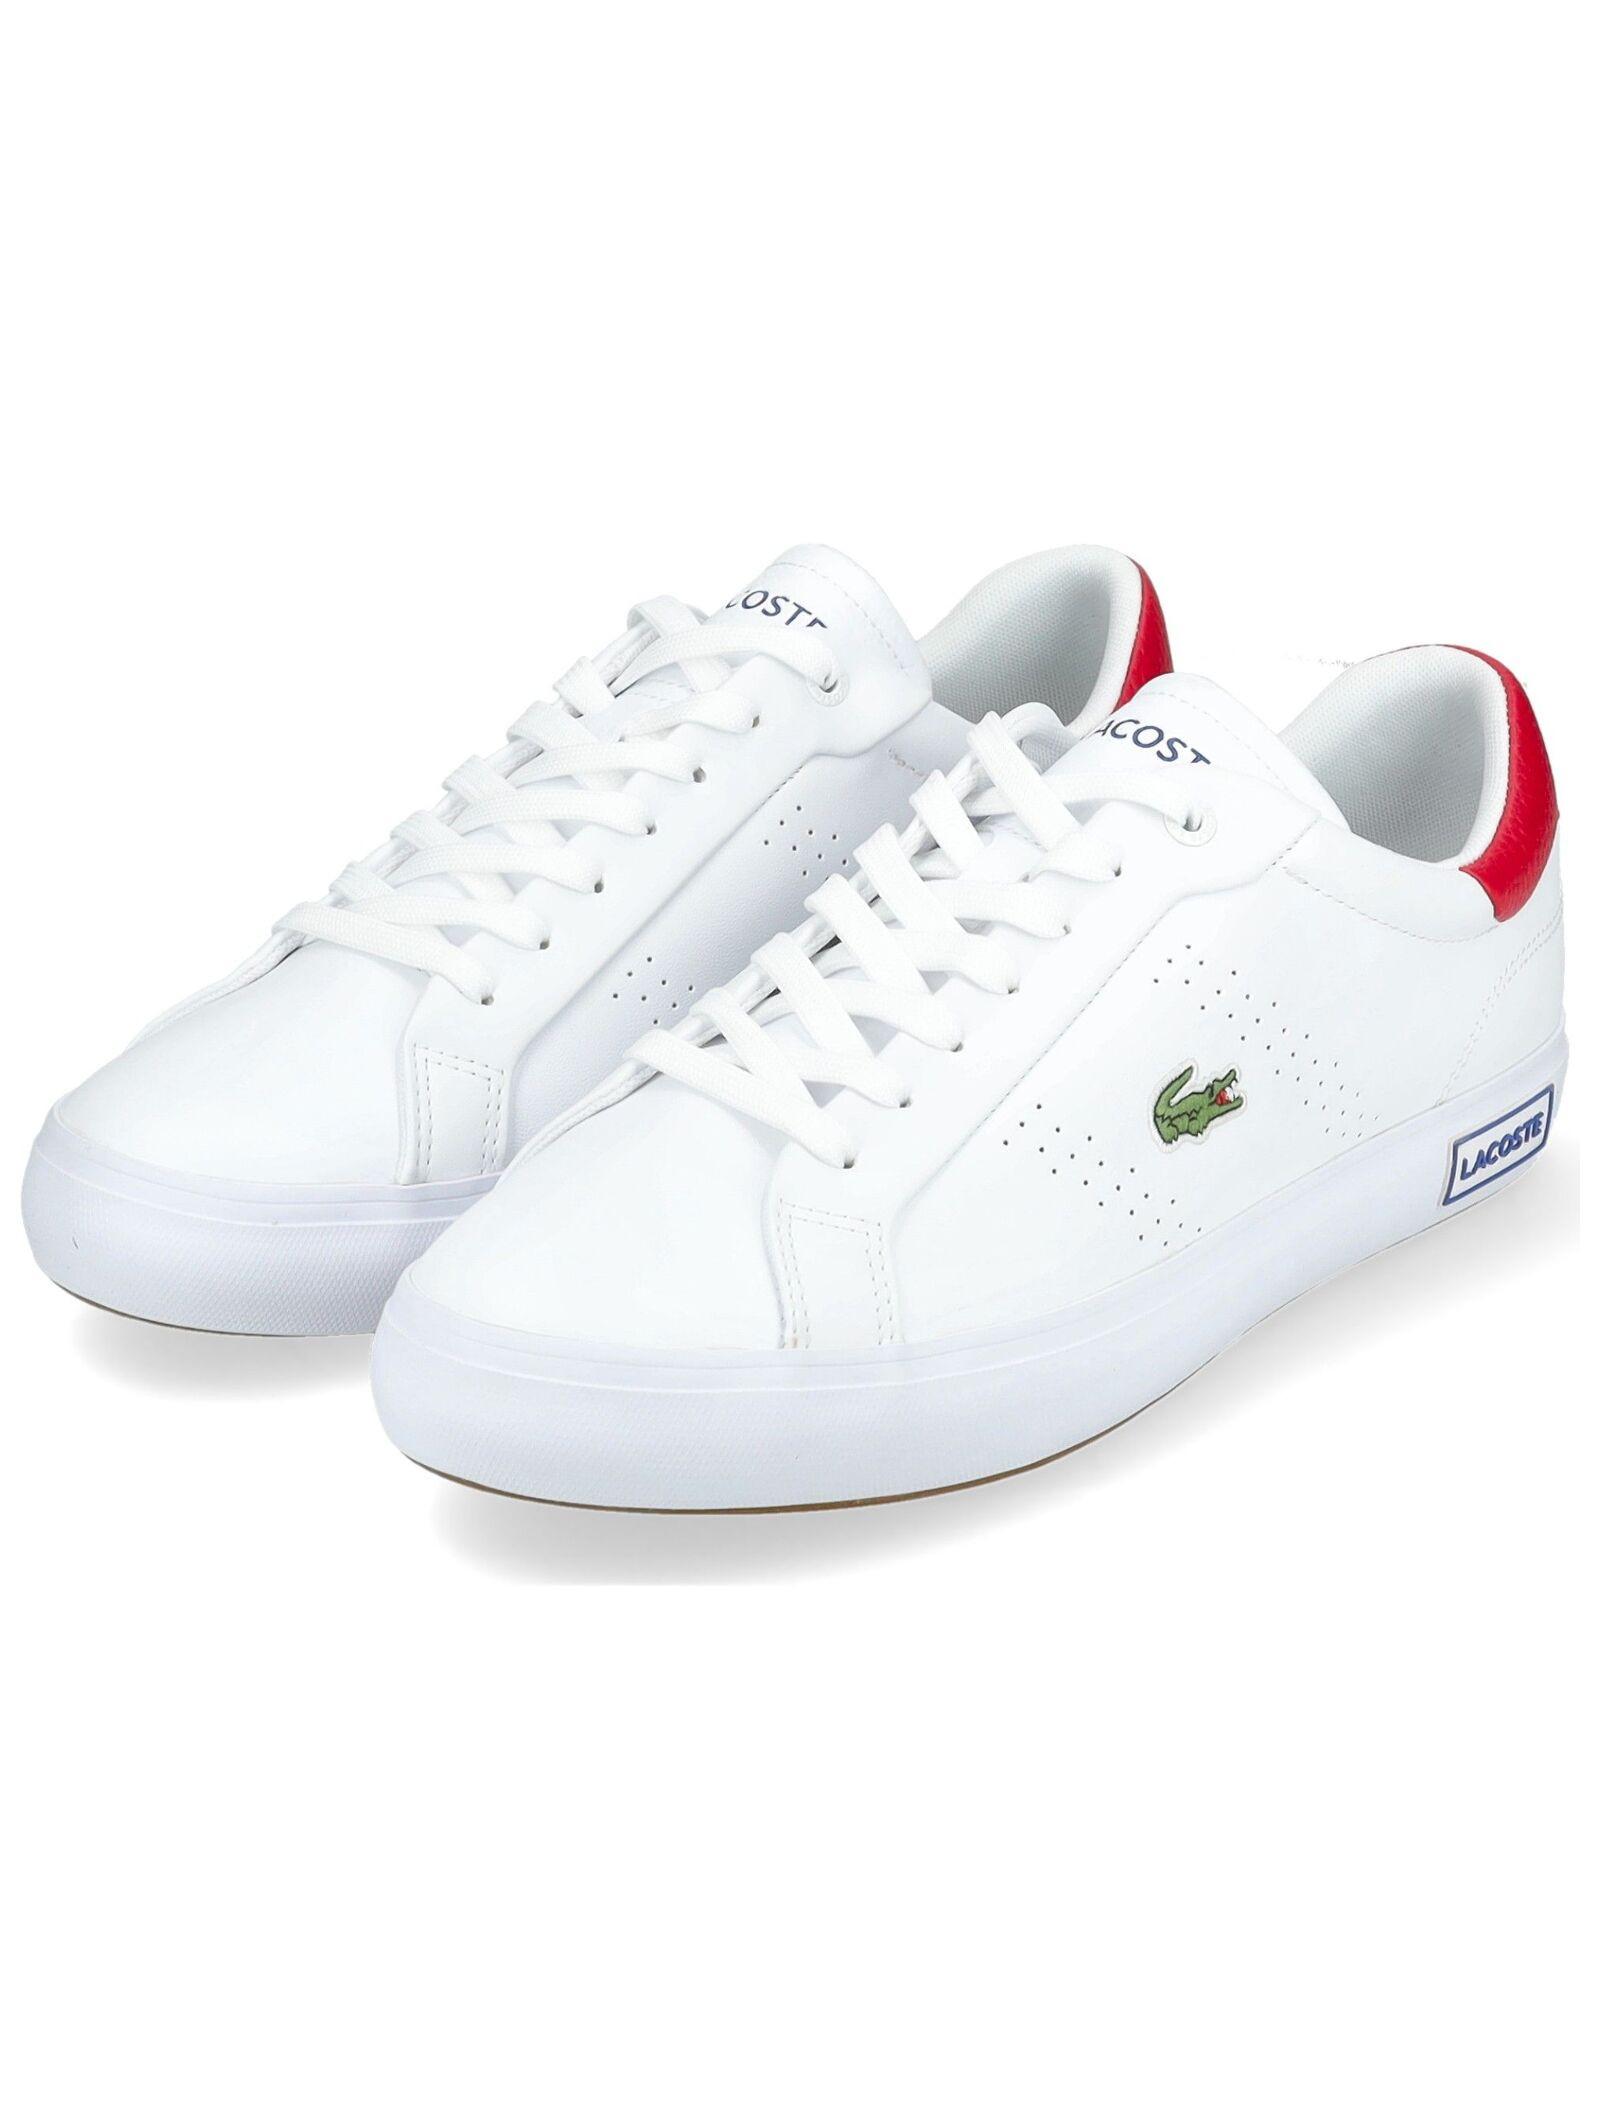 LACOSTE  Sneaker 47SMA0083 